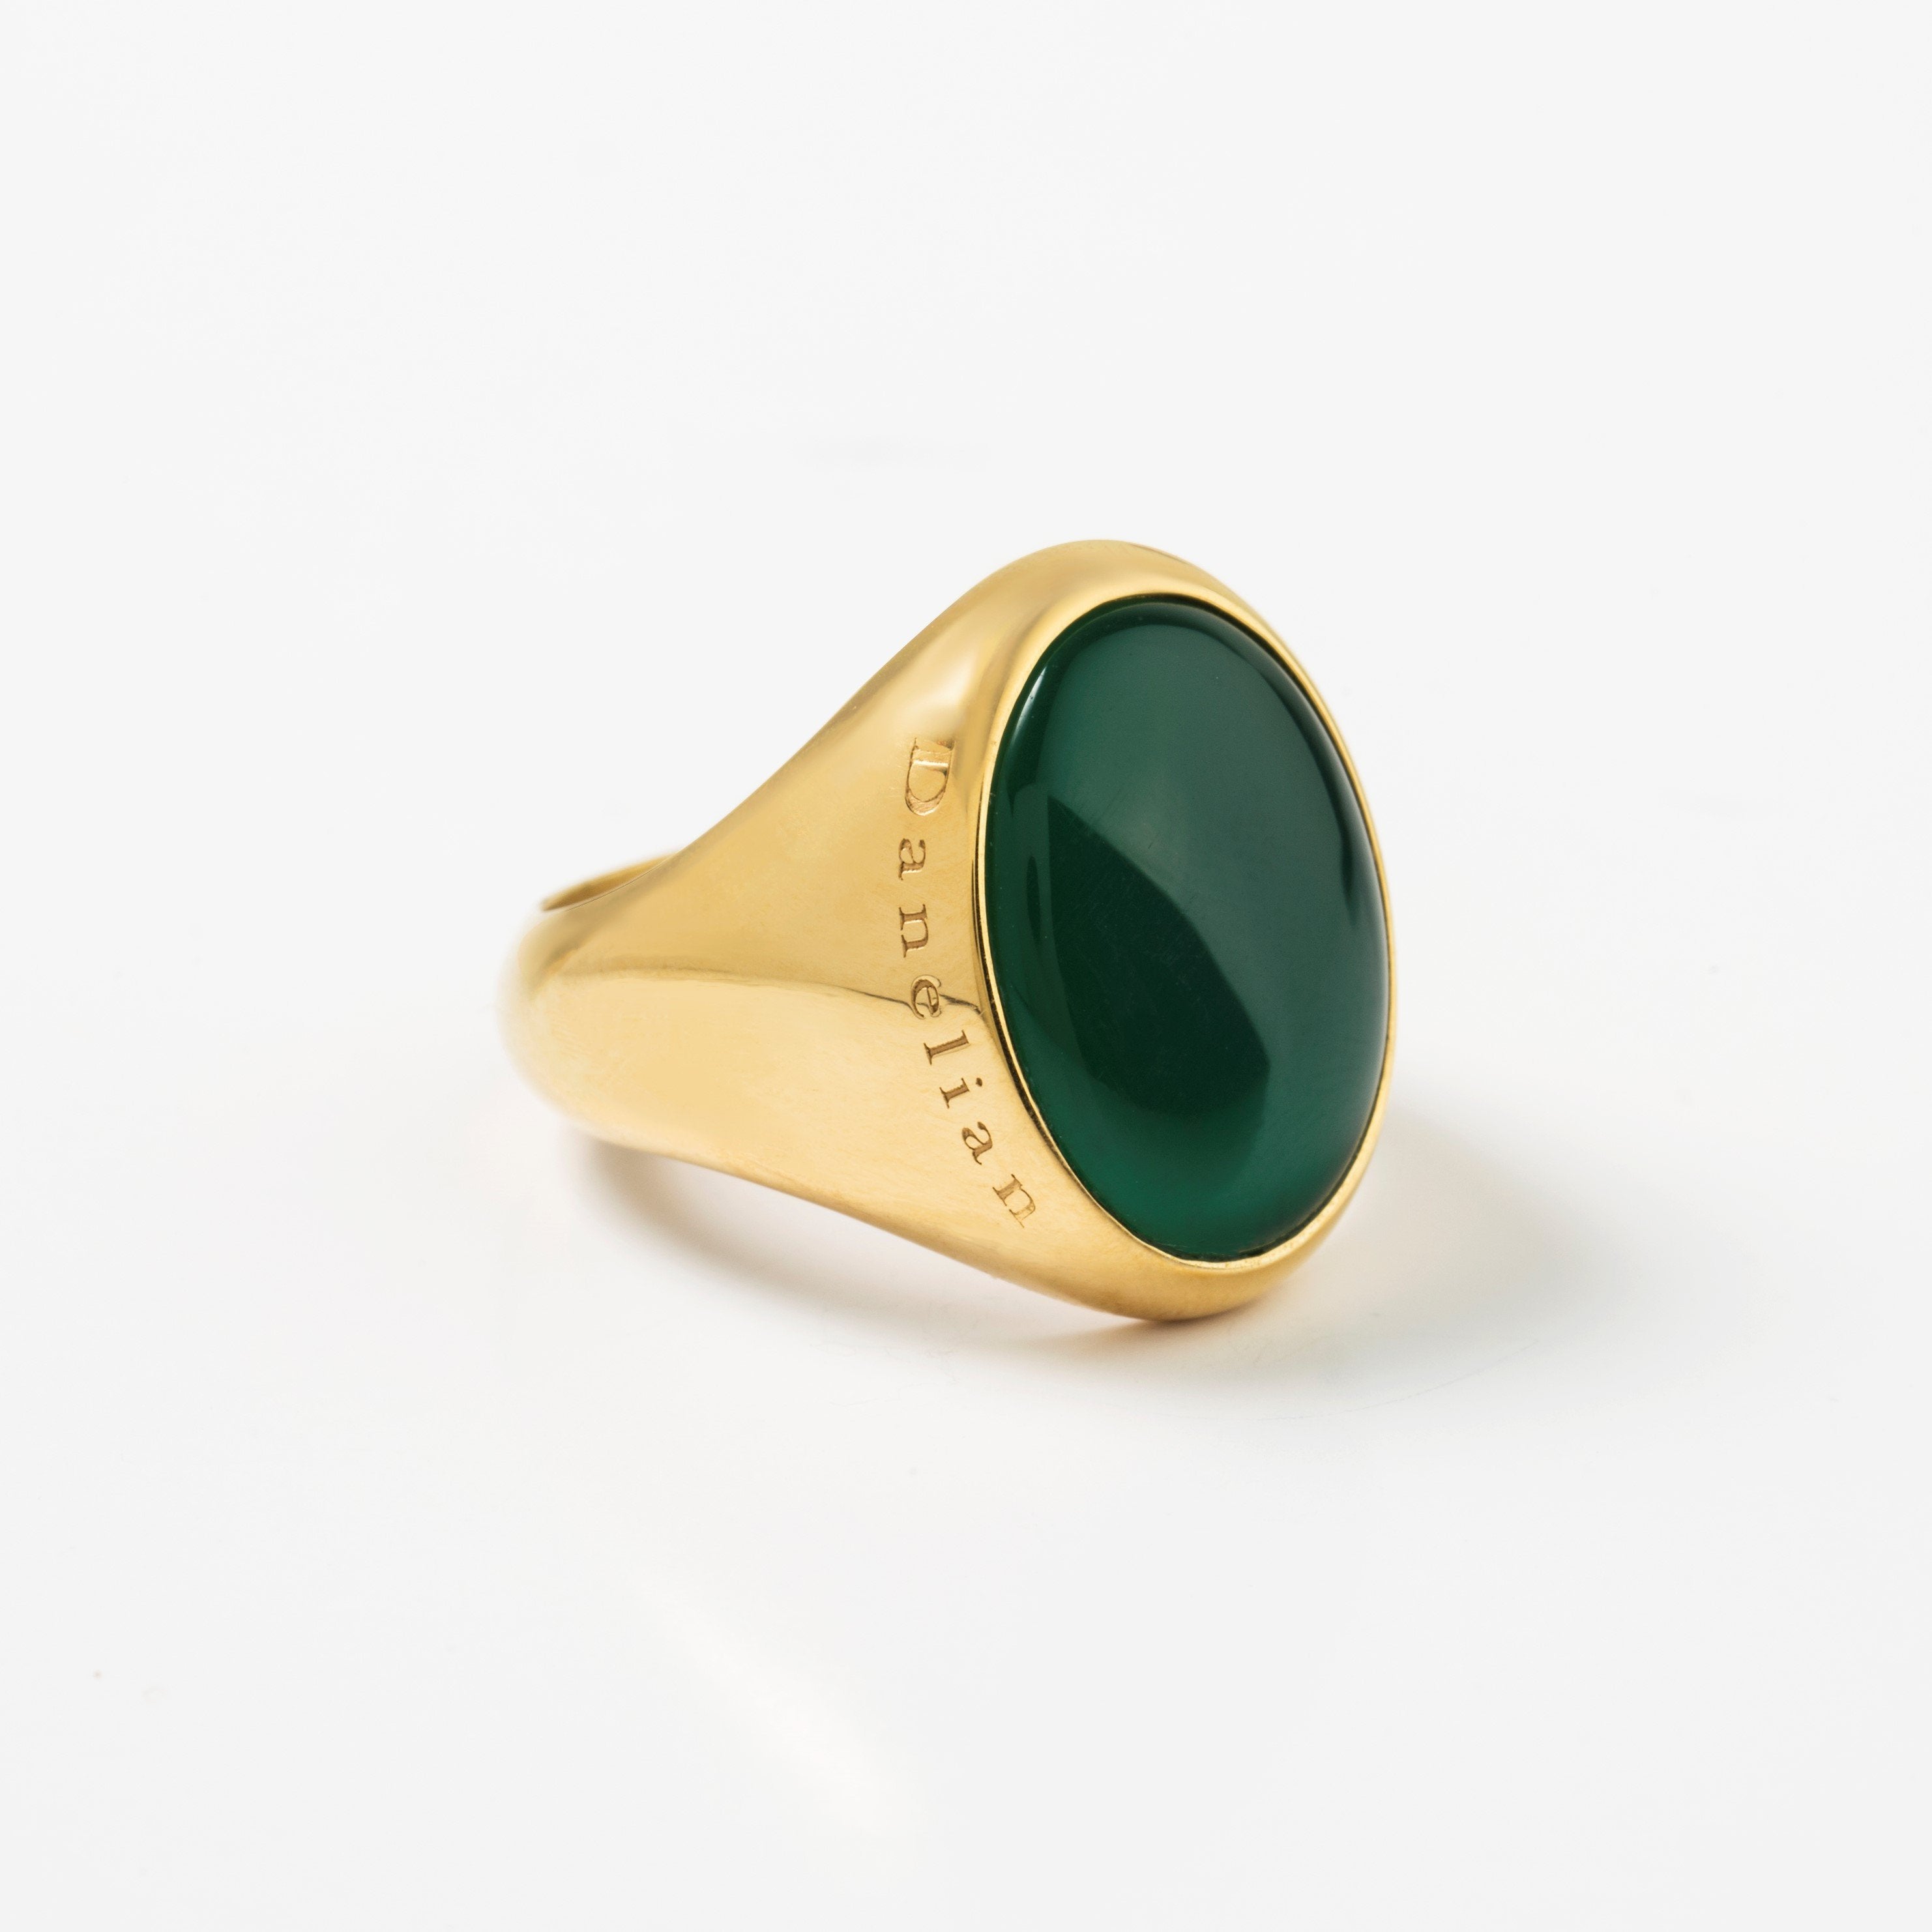 LARGE GREEN ONYX SIGNET RING - Danelian Jewelry